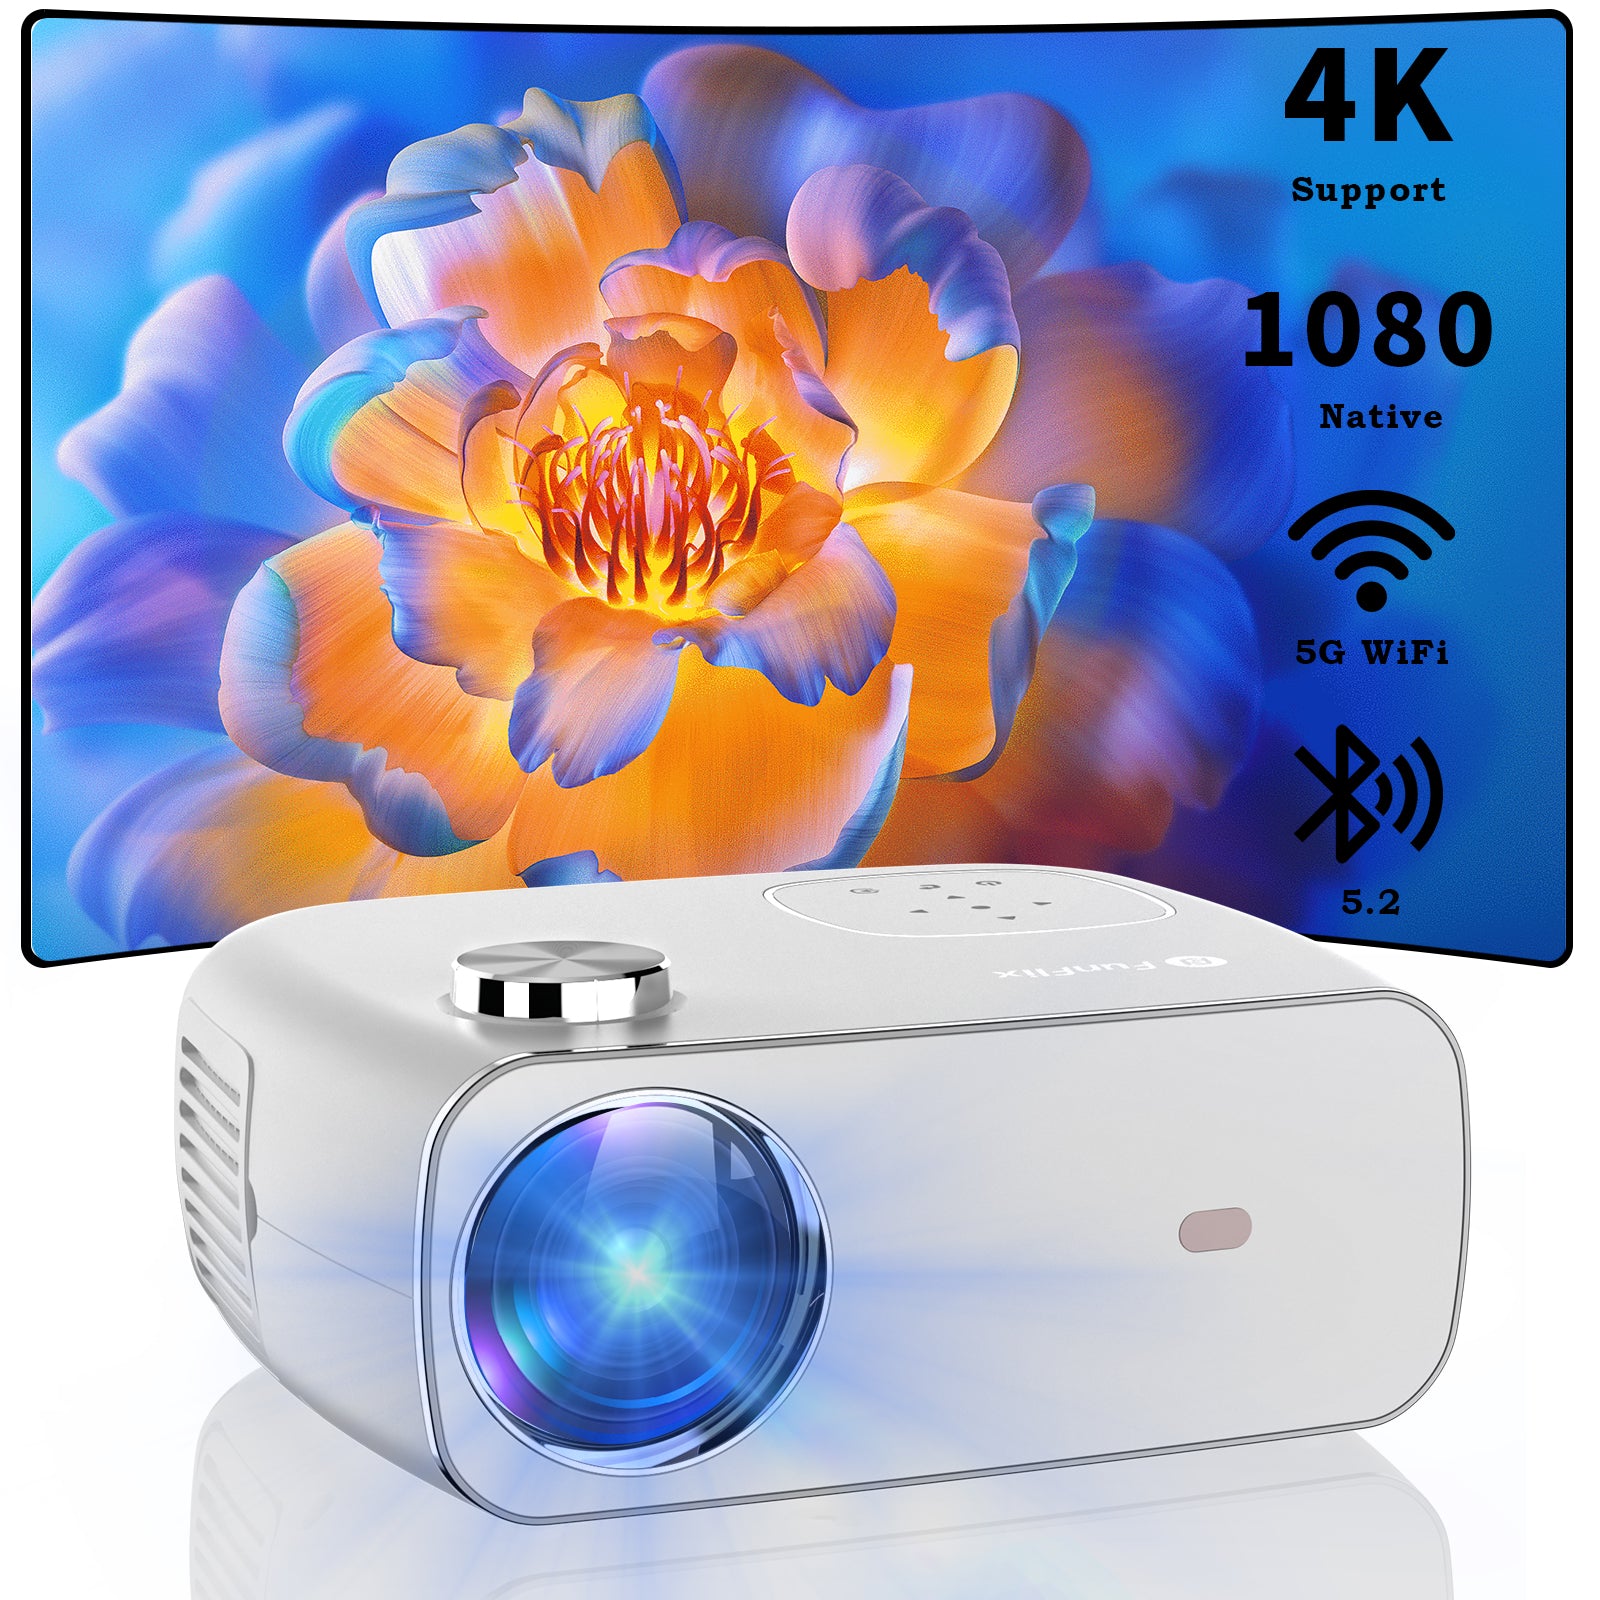 Portable Video Projector 1080P Full HD Compatible with Full HD 1080P HDMI, VGA, USB, AV, TV Stick, Laptop, Smartphone